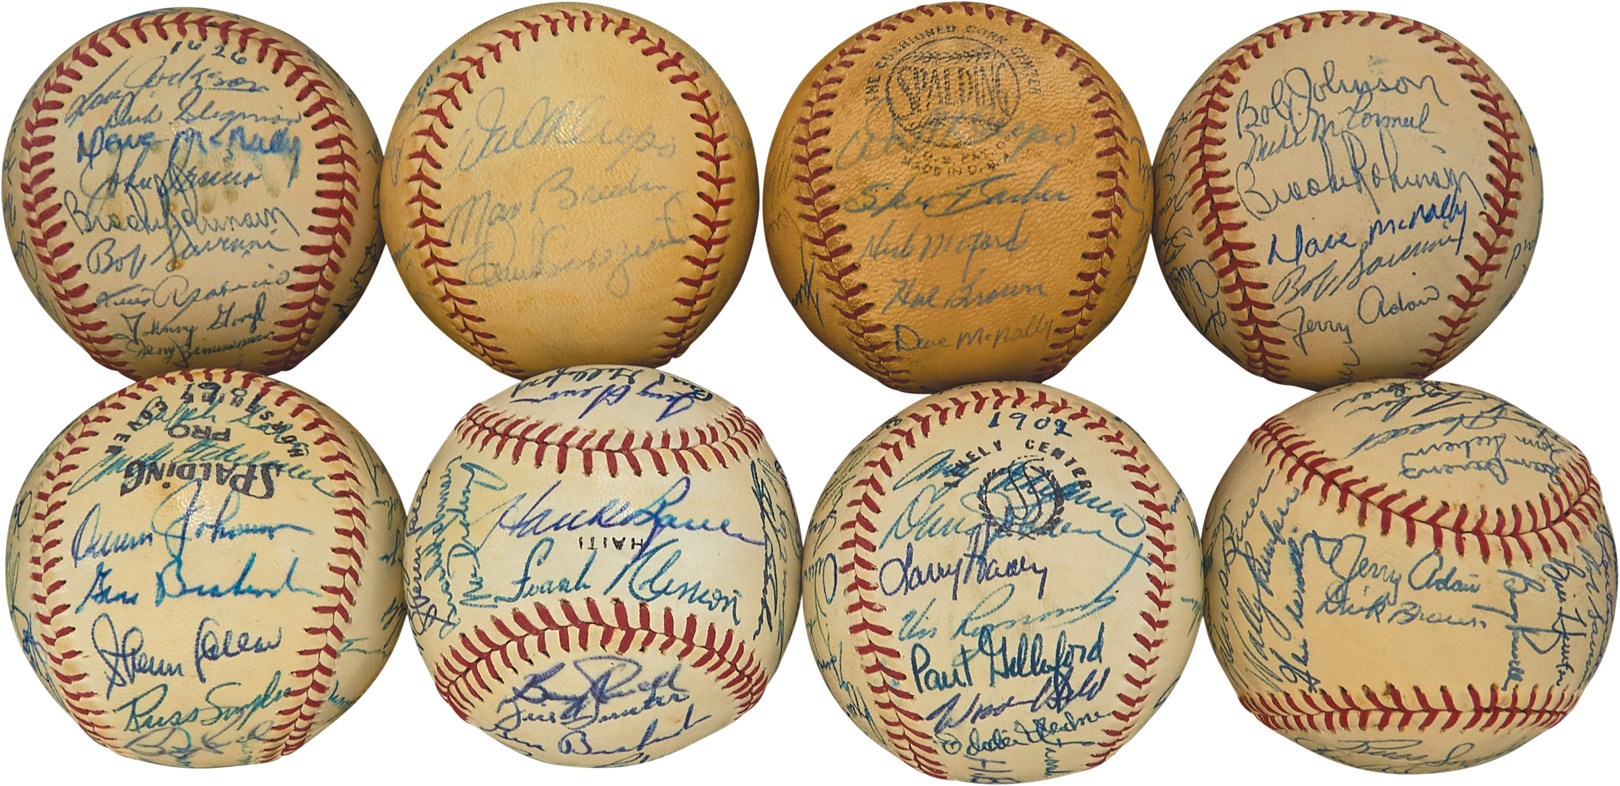 The John O'connor Signed Baseball Collection - 1961-67 Baltimore Orioles Team-Signed Baseballs Near Run w/1966 World Champions (8)